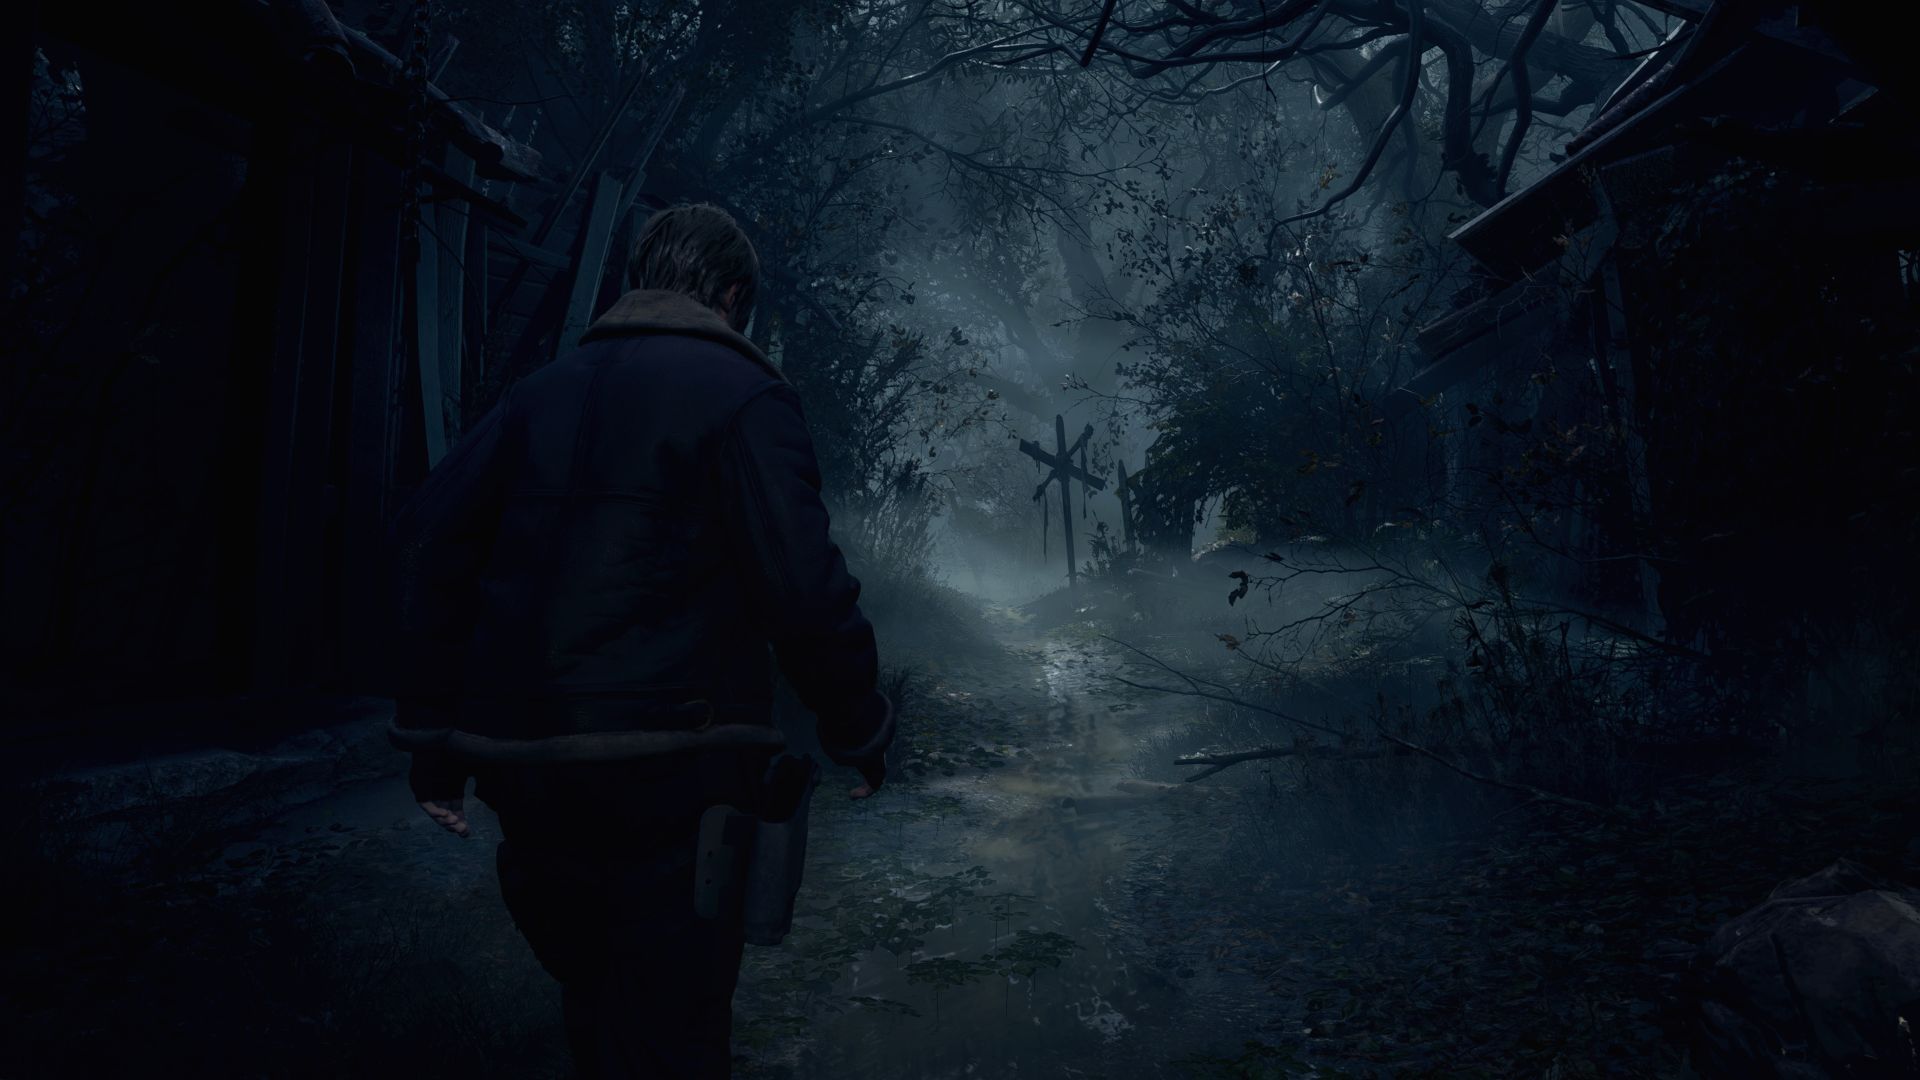 Resident Evil 4 (Remake) - Ashley Graham_XPS by Kanbara914 on DeviantArt